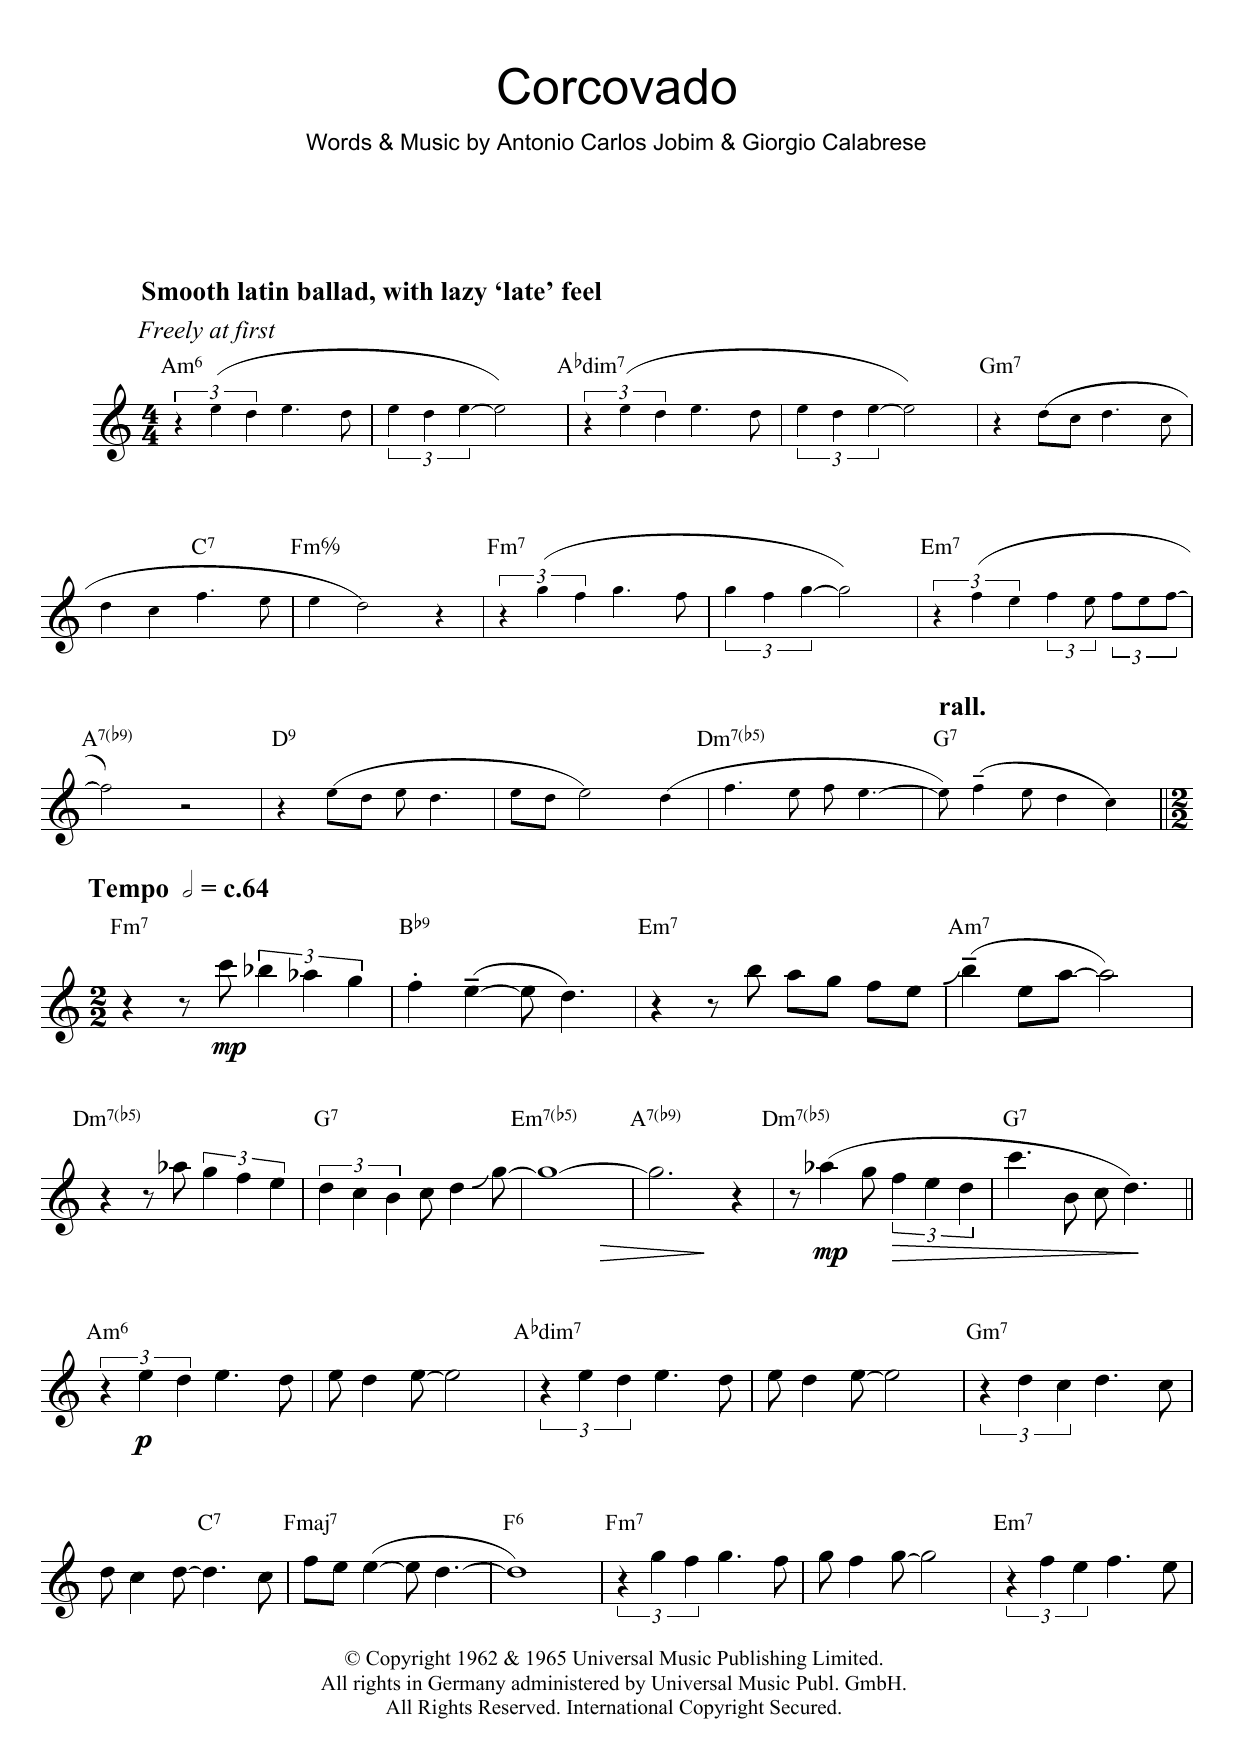 Antonio Carlos Jobim Corcovado (Quiet Nights Of Quiet Stars) Sheet Music Notes & Chords for Violin - Download or Print PDF